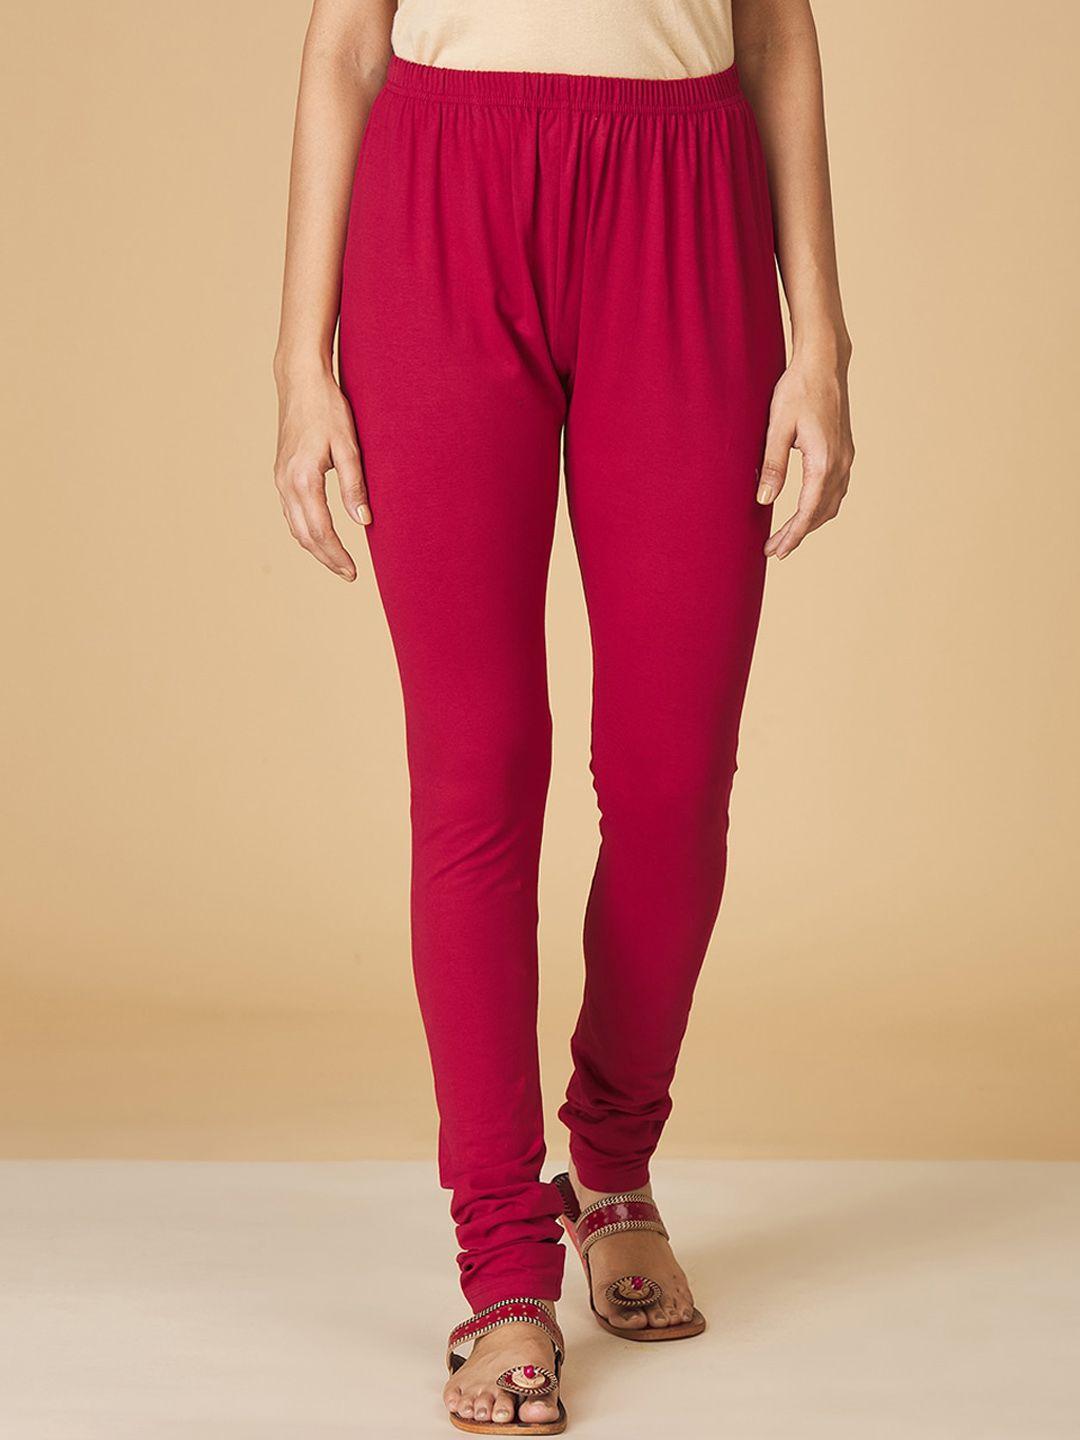 fabindia red cotton churidar length leggings